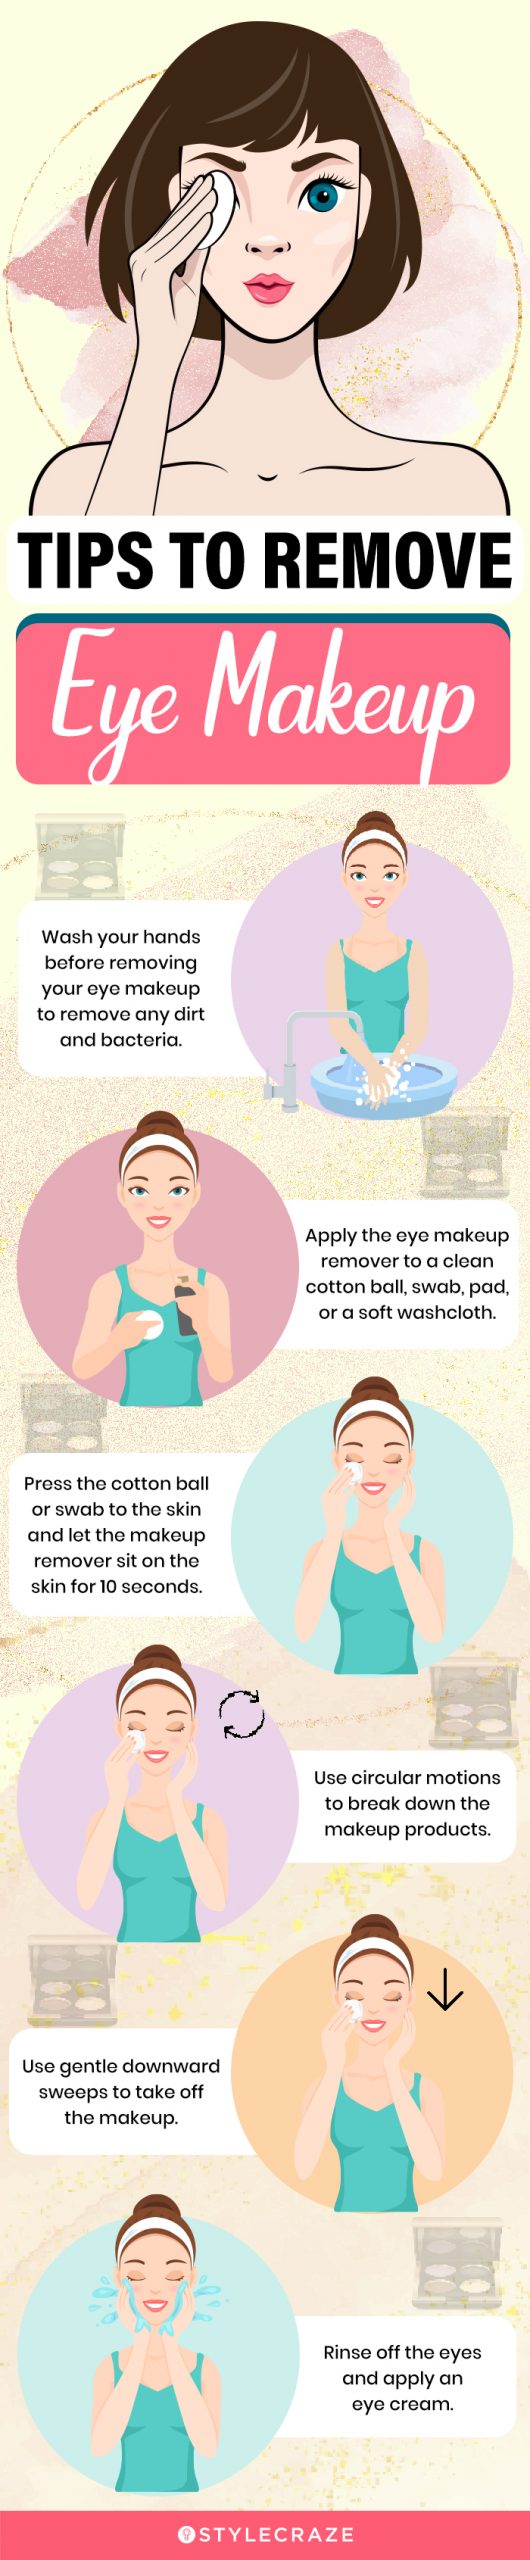 Tips To Remove Eye Makeup (infographic)